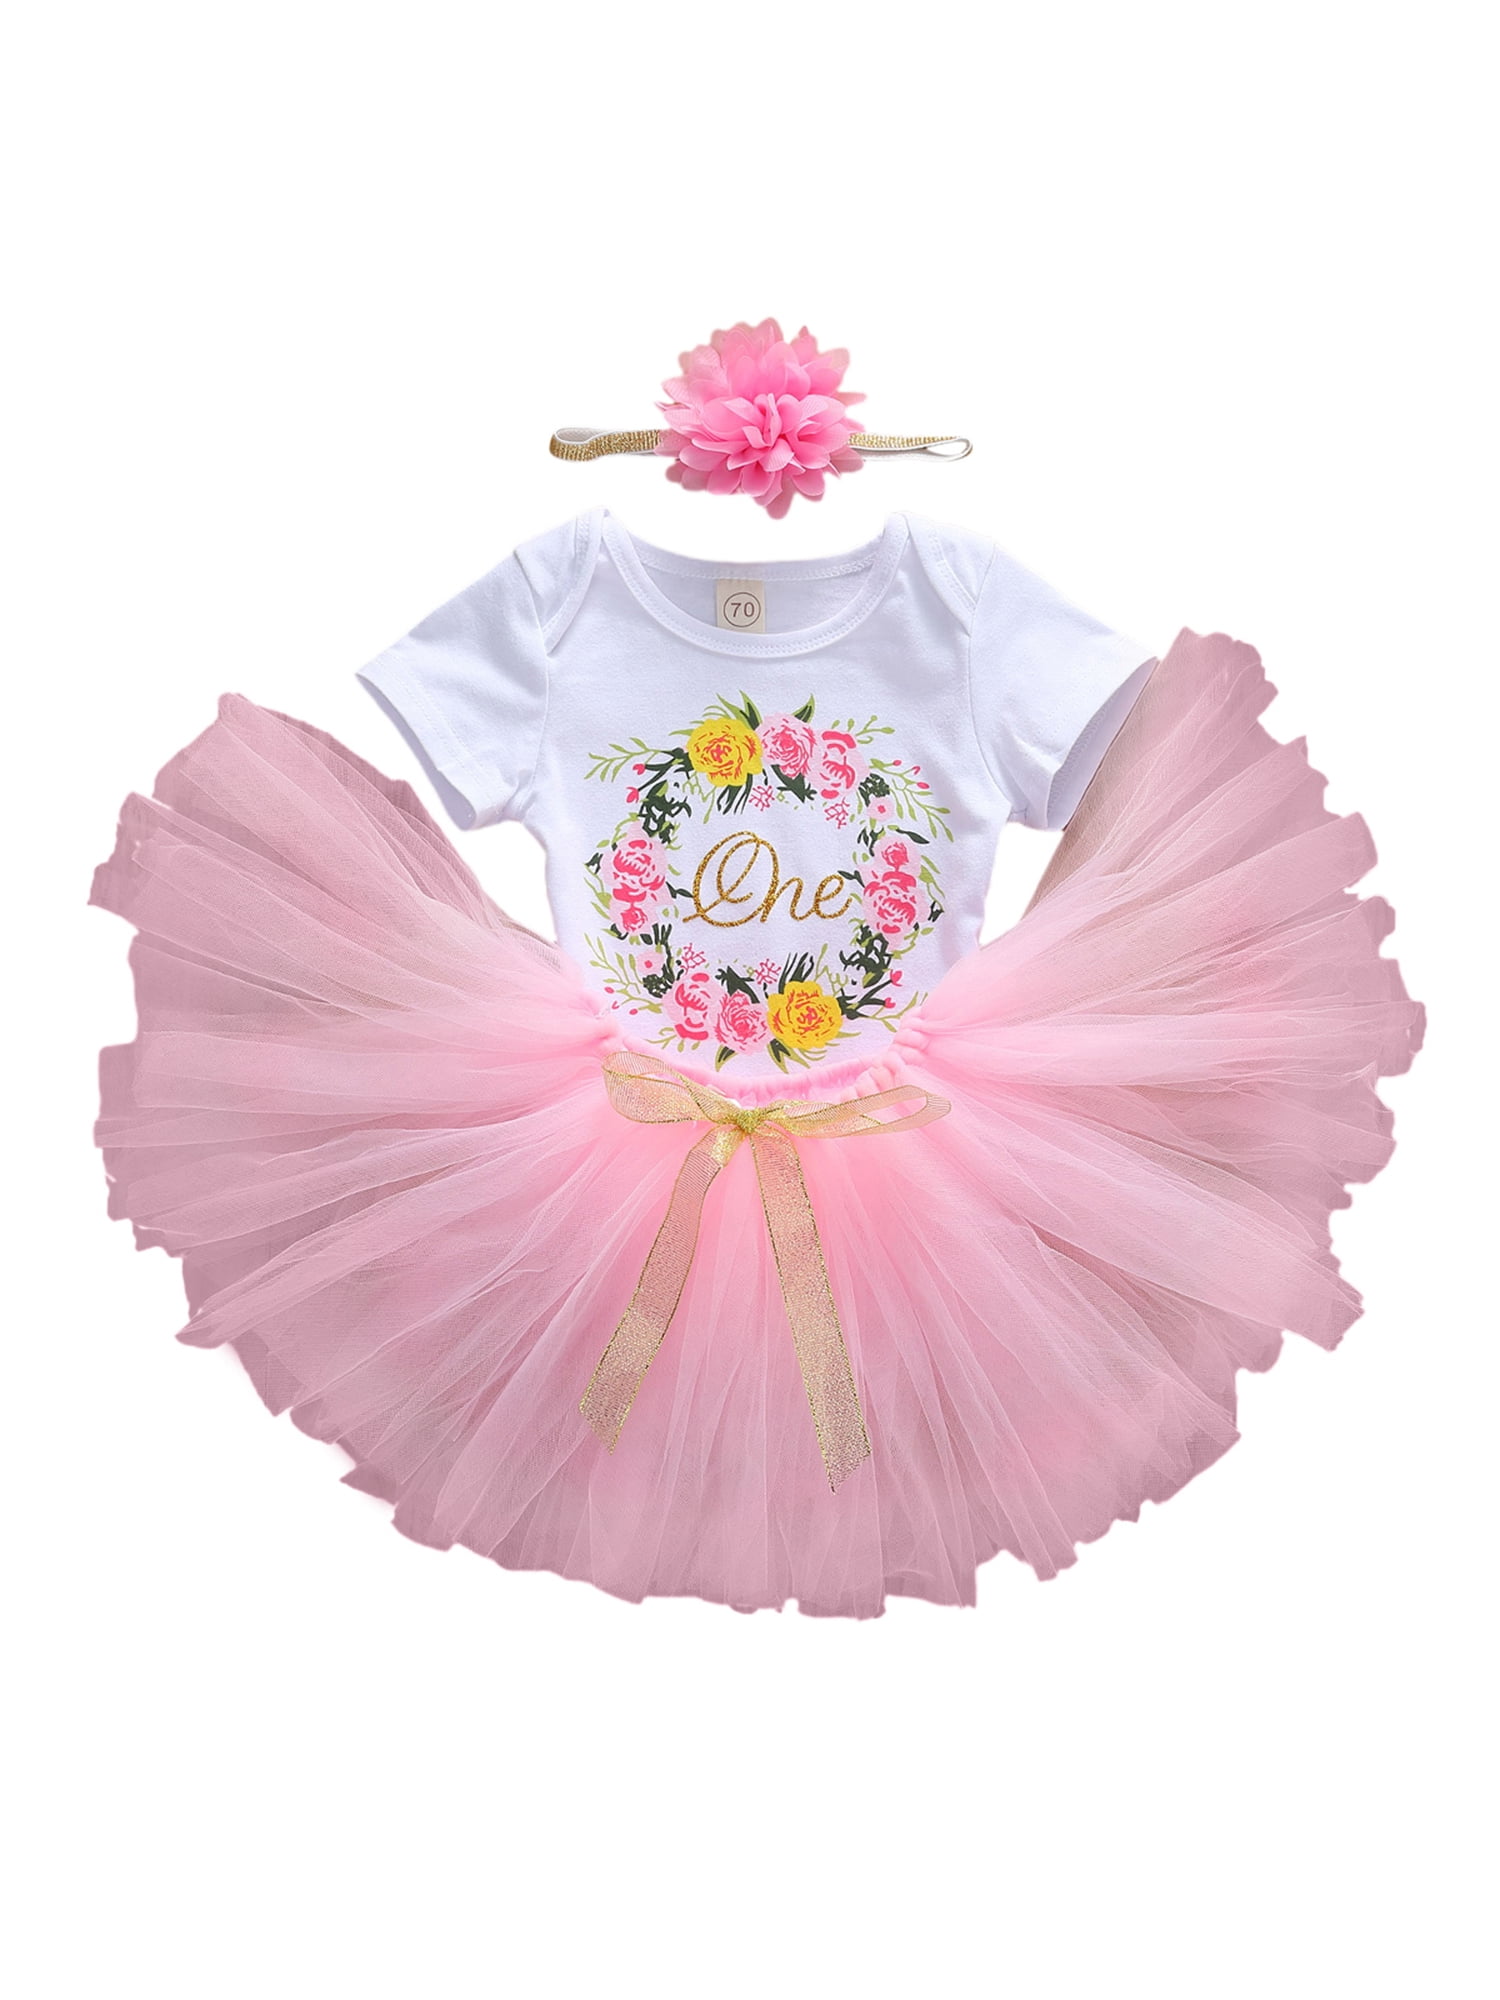 ONES Baby Girls 1st Birthday Dress Outfits Sleeveless Bodysuit Romper+Tutu Skirt Set